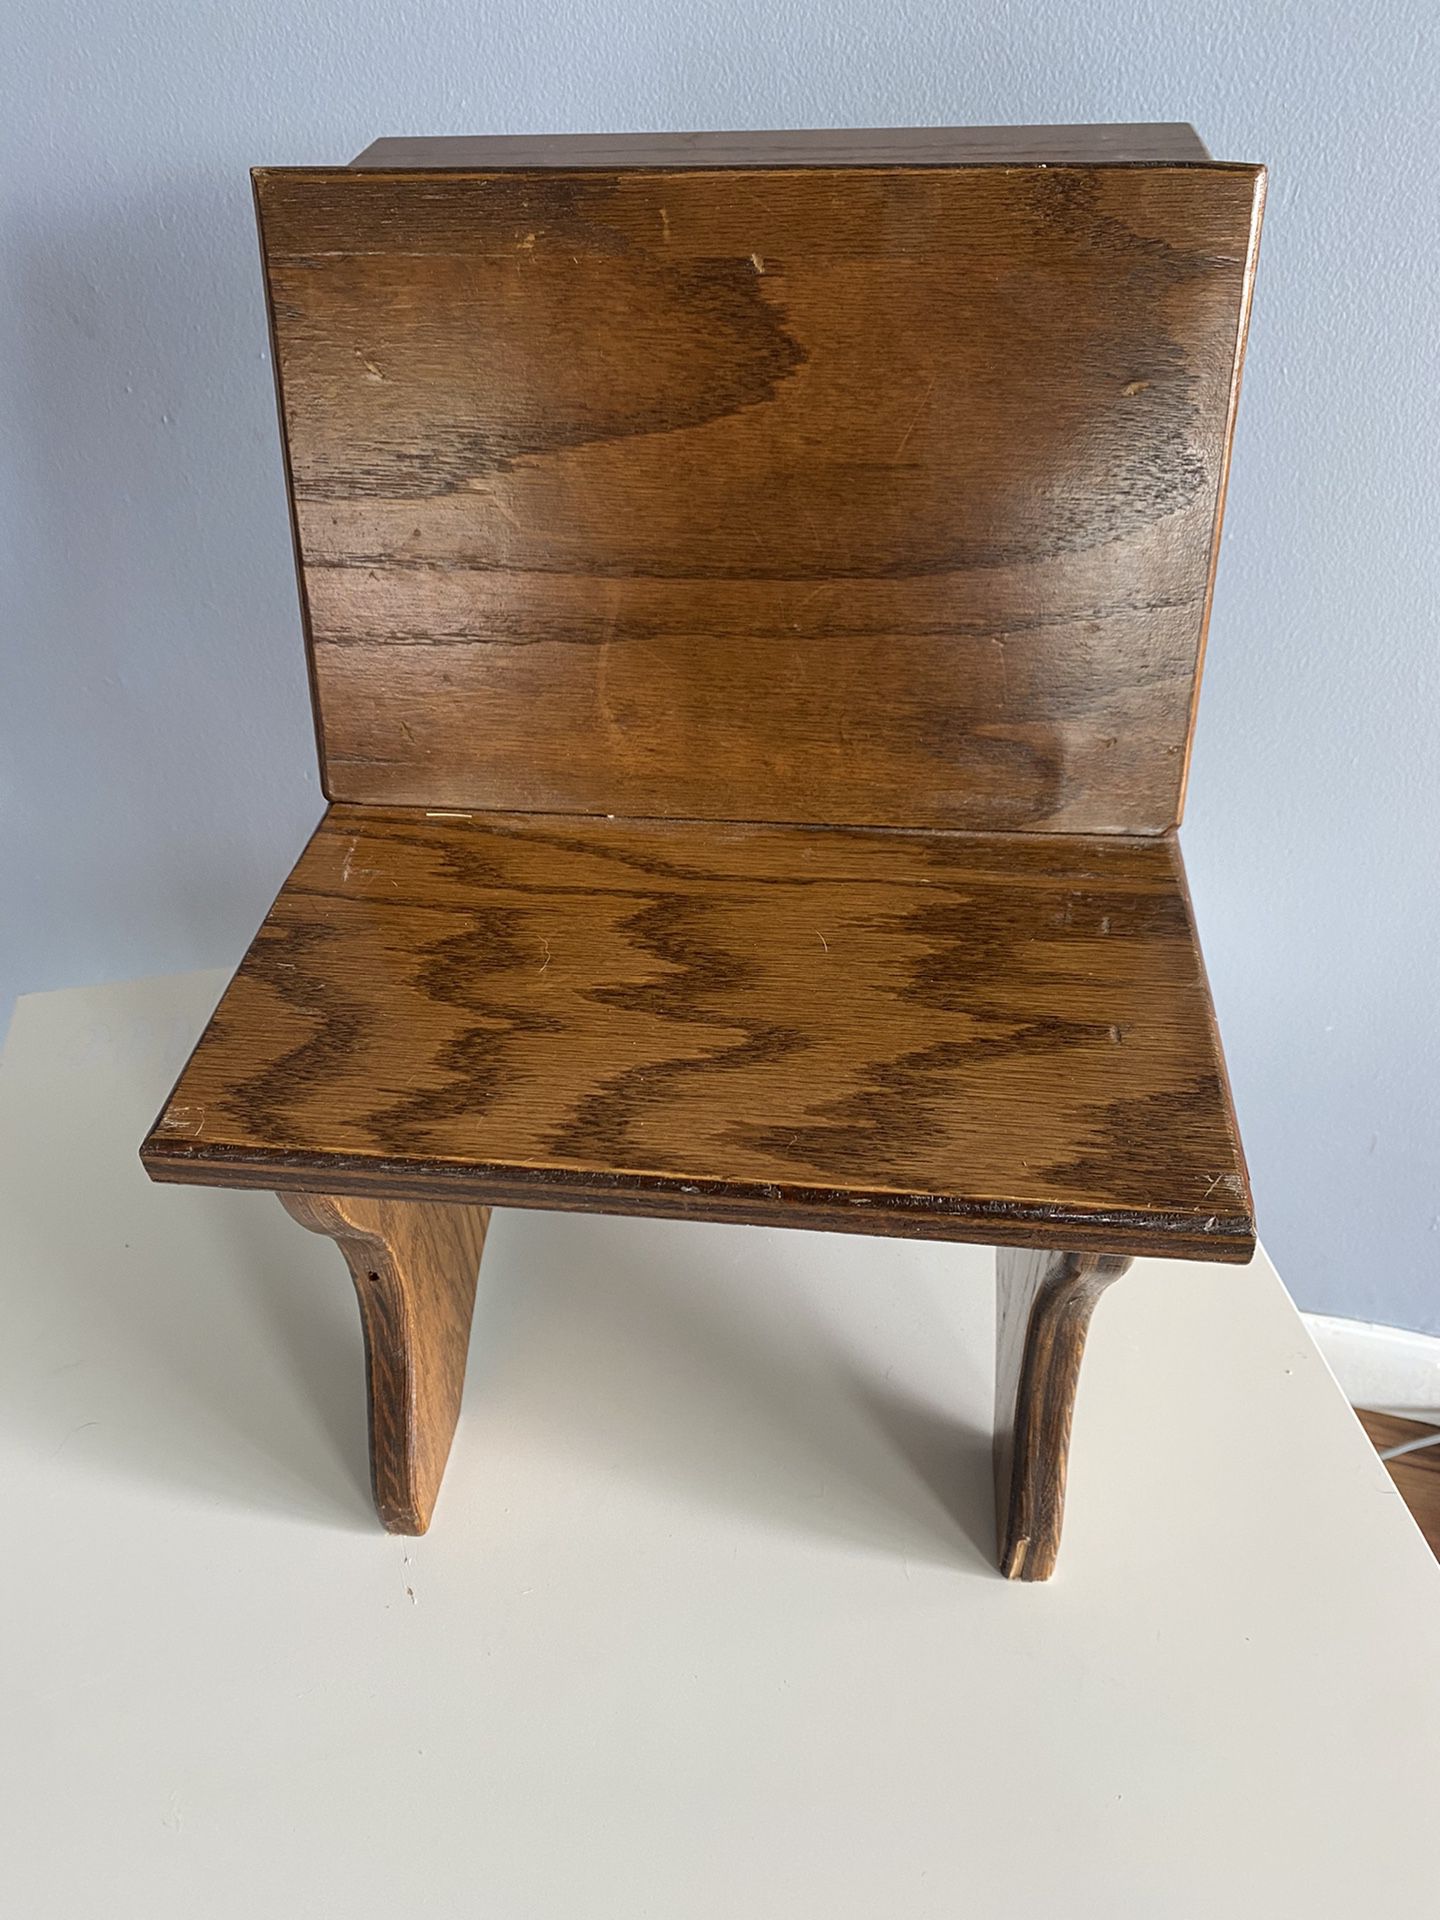 Antique Wooden Doll Desk Chair 